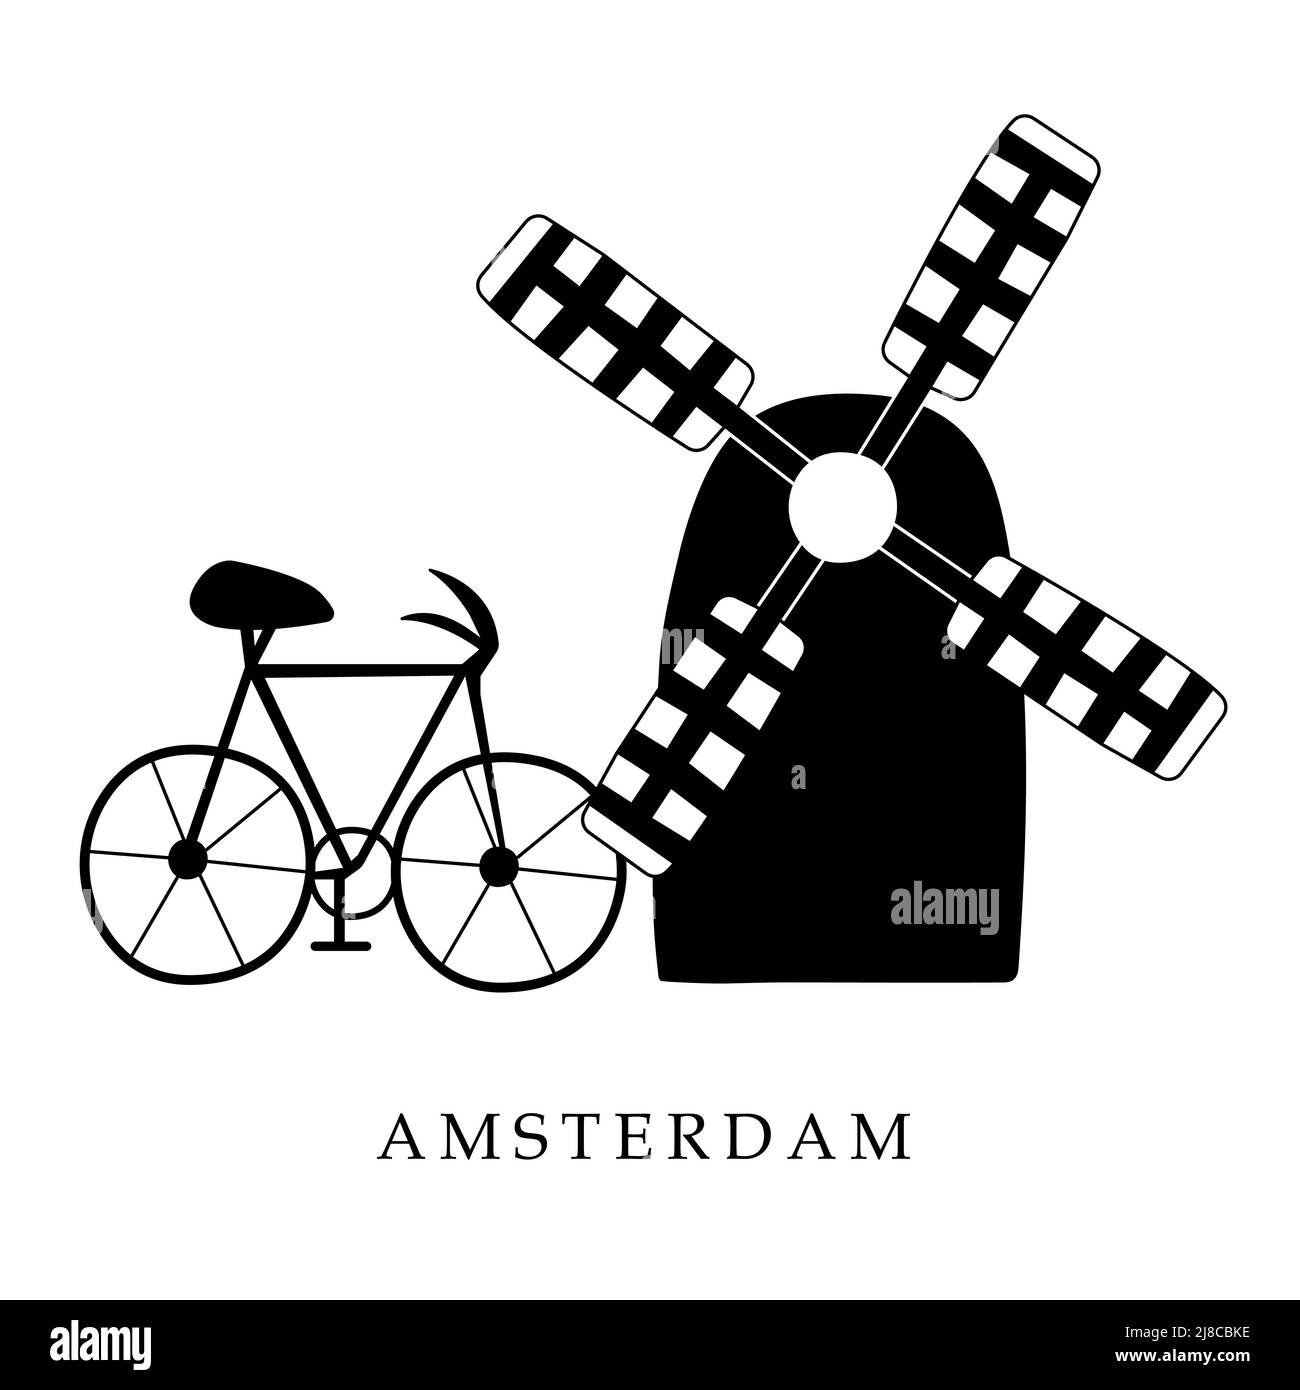 European capitals, Amsterdam. Black and white illustration Stock Vector